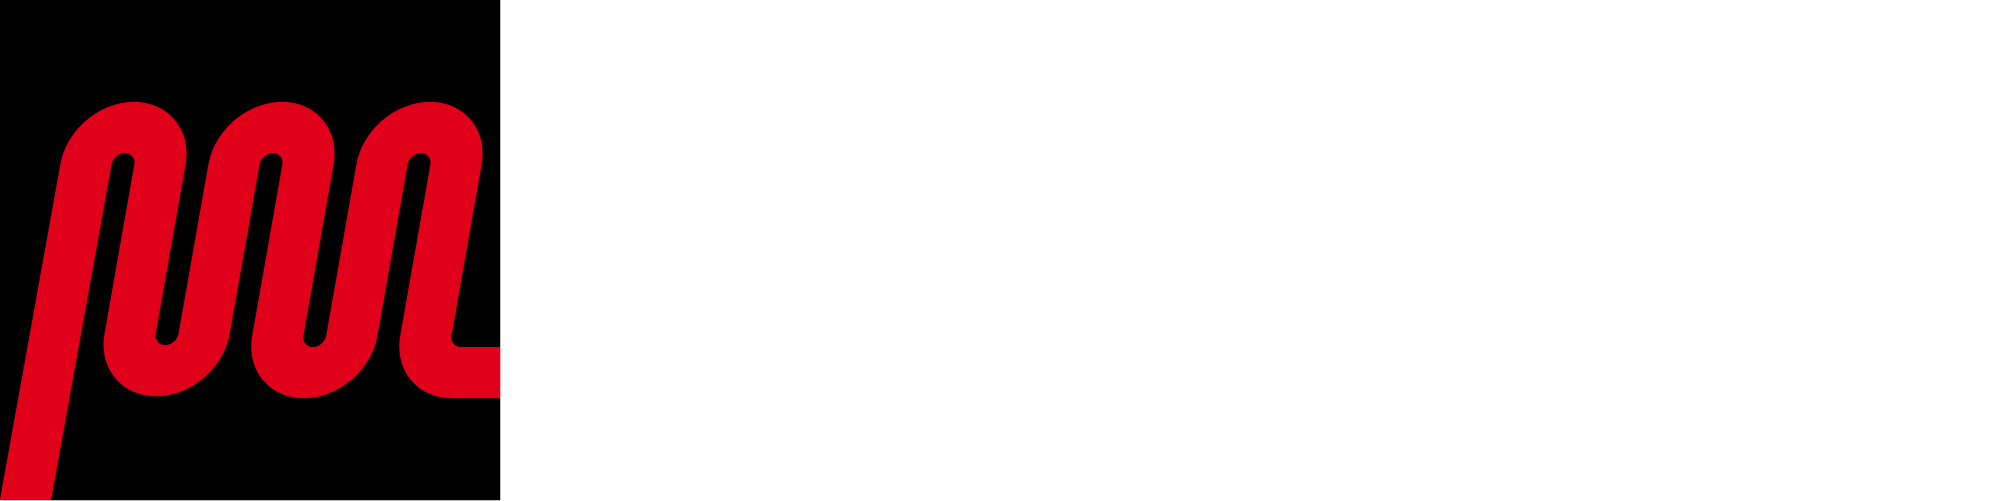 vvs-per-moeller-logo-hvid